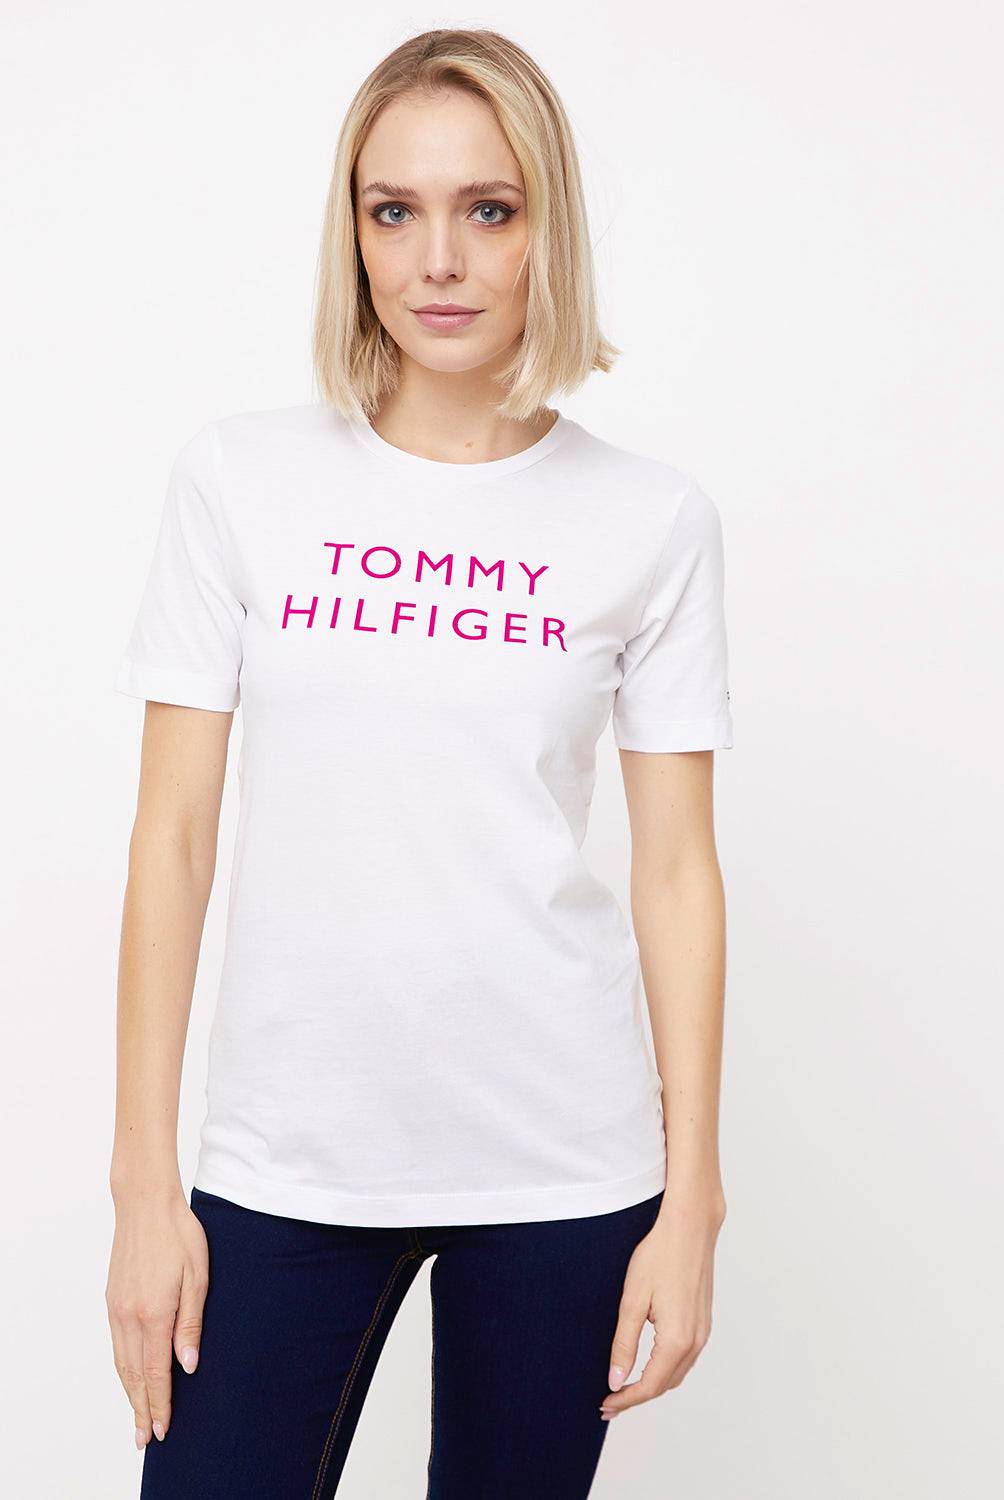 TOMMY HILFIGER - Tommy Hilfiger Polera Estampada Logo Manga Corta Mujer